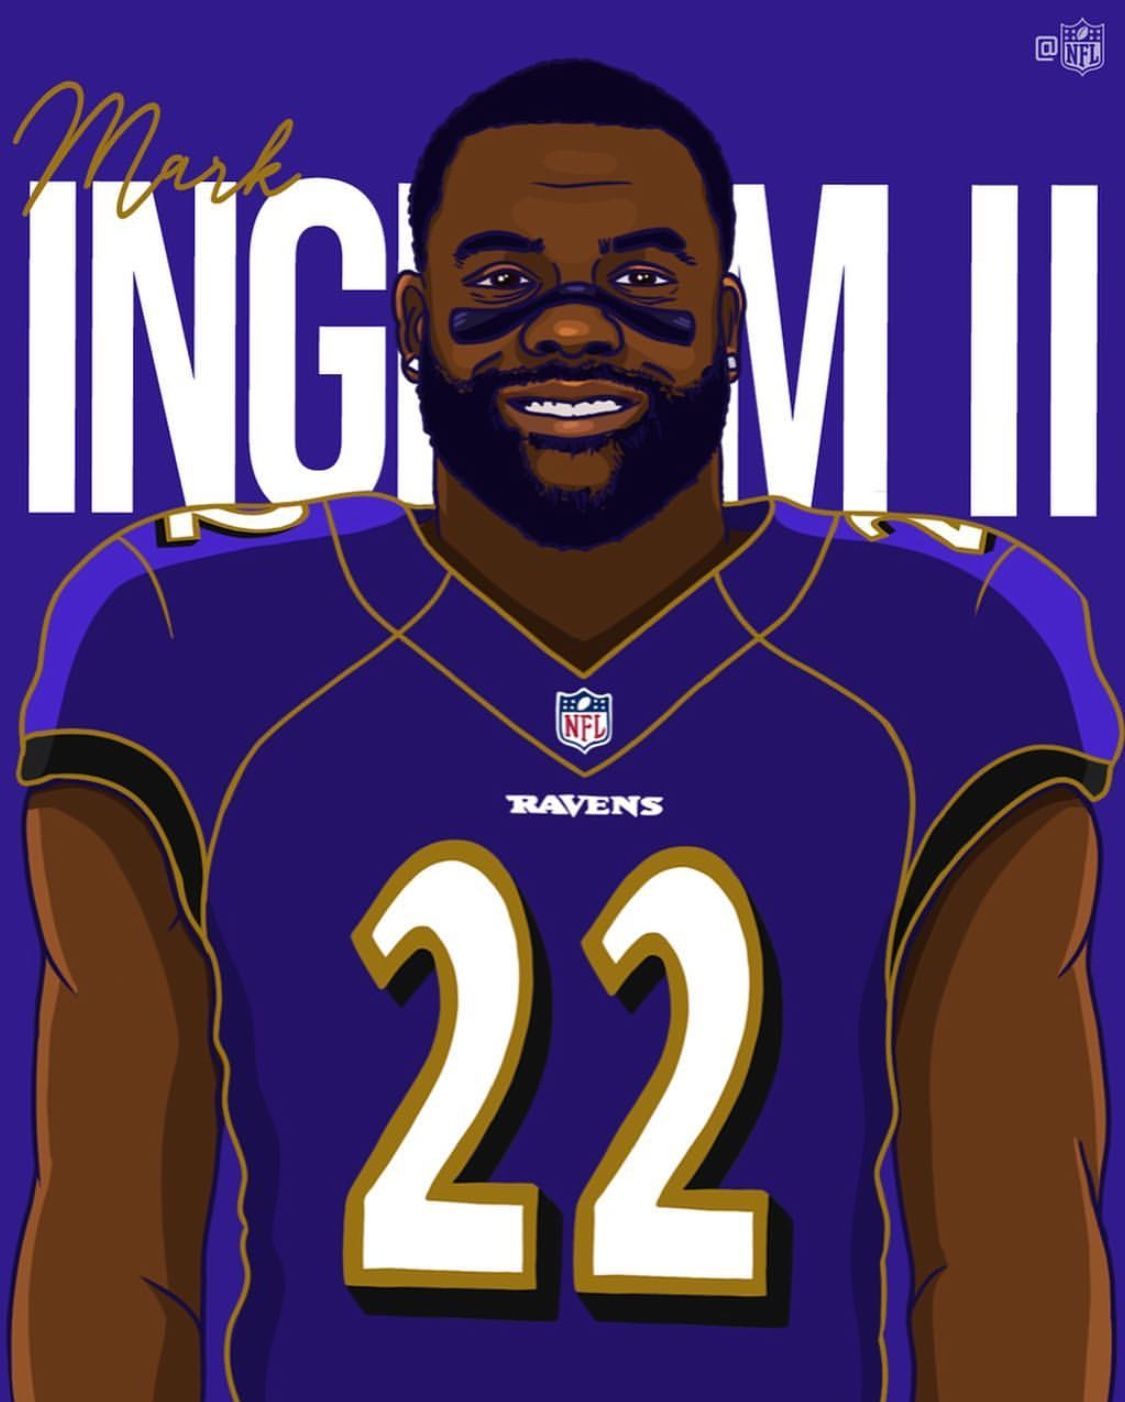 Mark Ingram going to Baltimore. Ravens are confusing me. Ravens football, American football, Nfl football logos